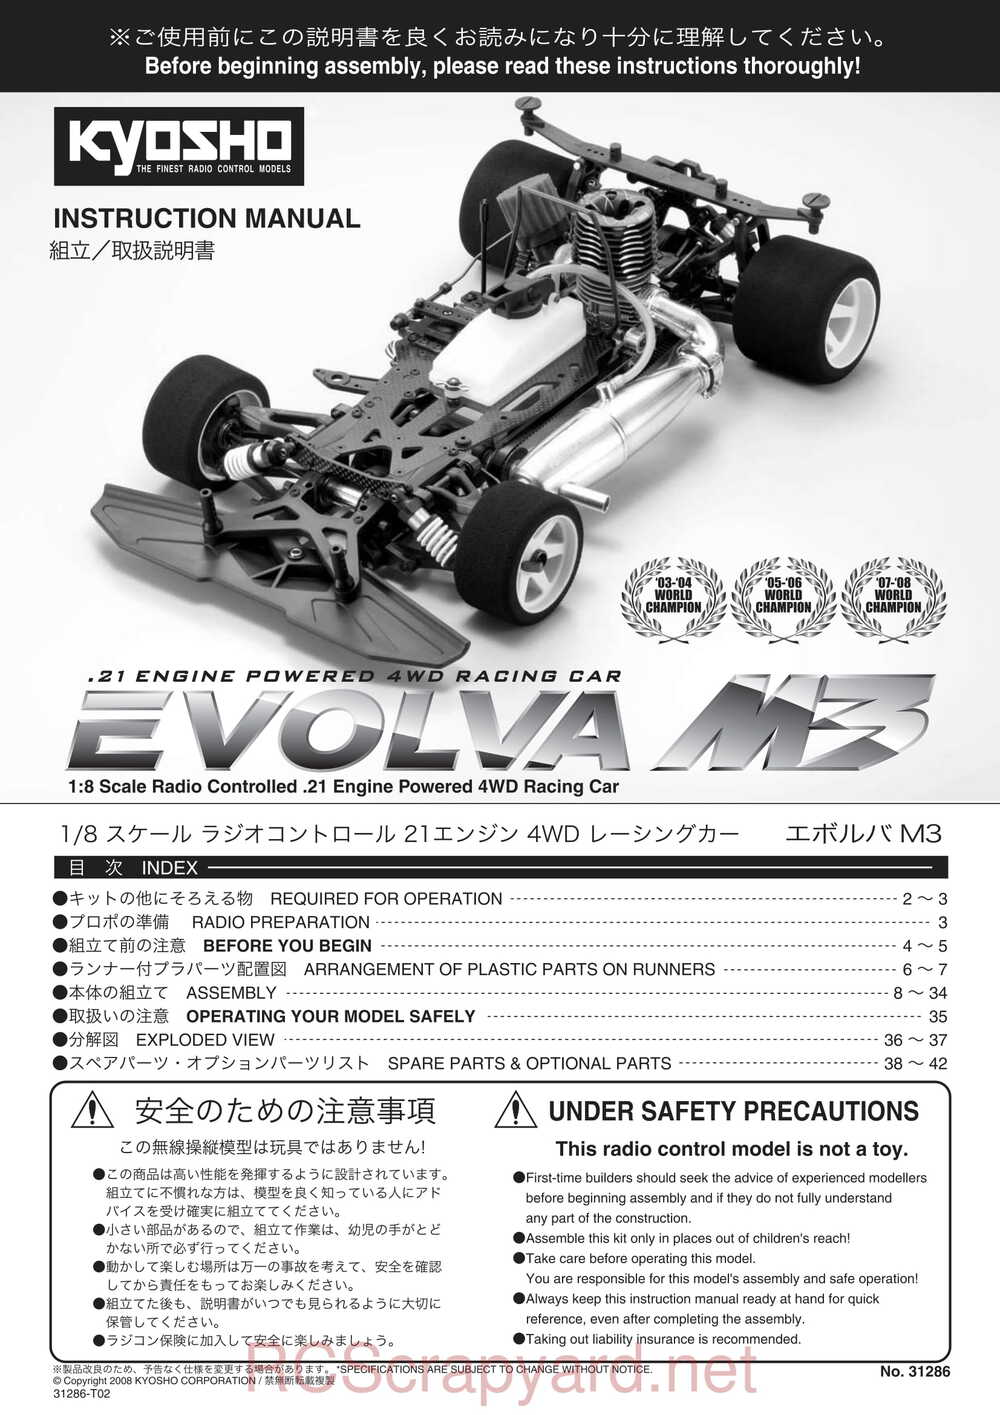 Kyosho - 31286 - Evolva-M3 - Manual - Page 01